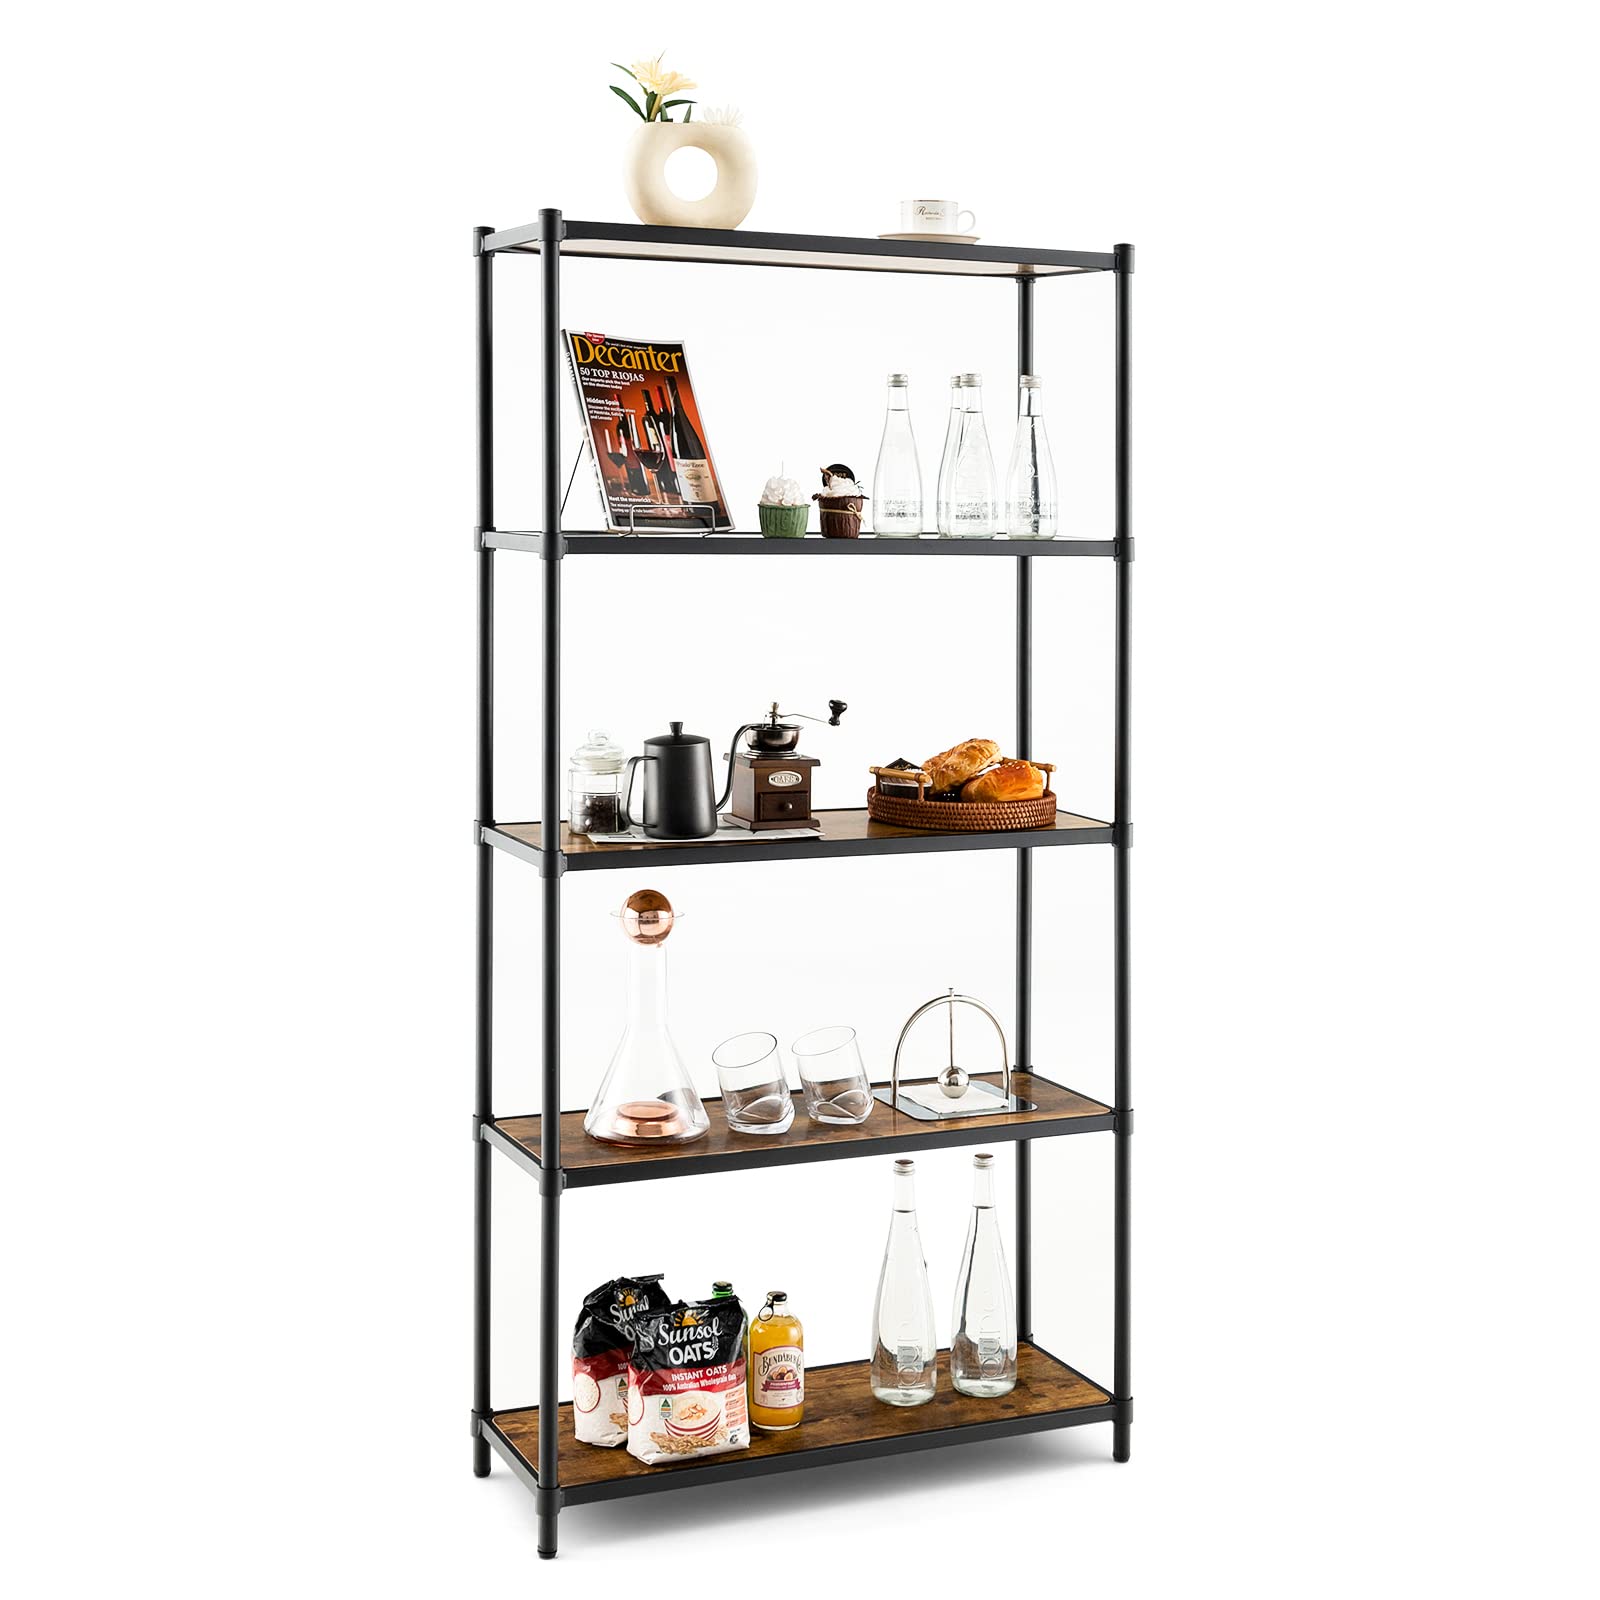 Giantex 5-Tier Industrial Bookshelf Black - 61" Tall Open Display Shelving Rack